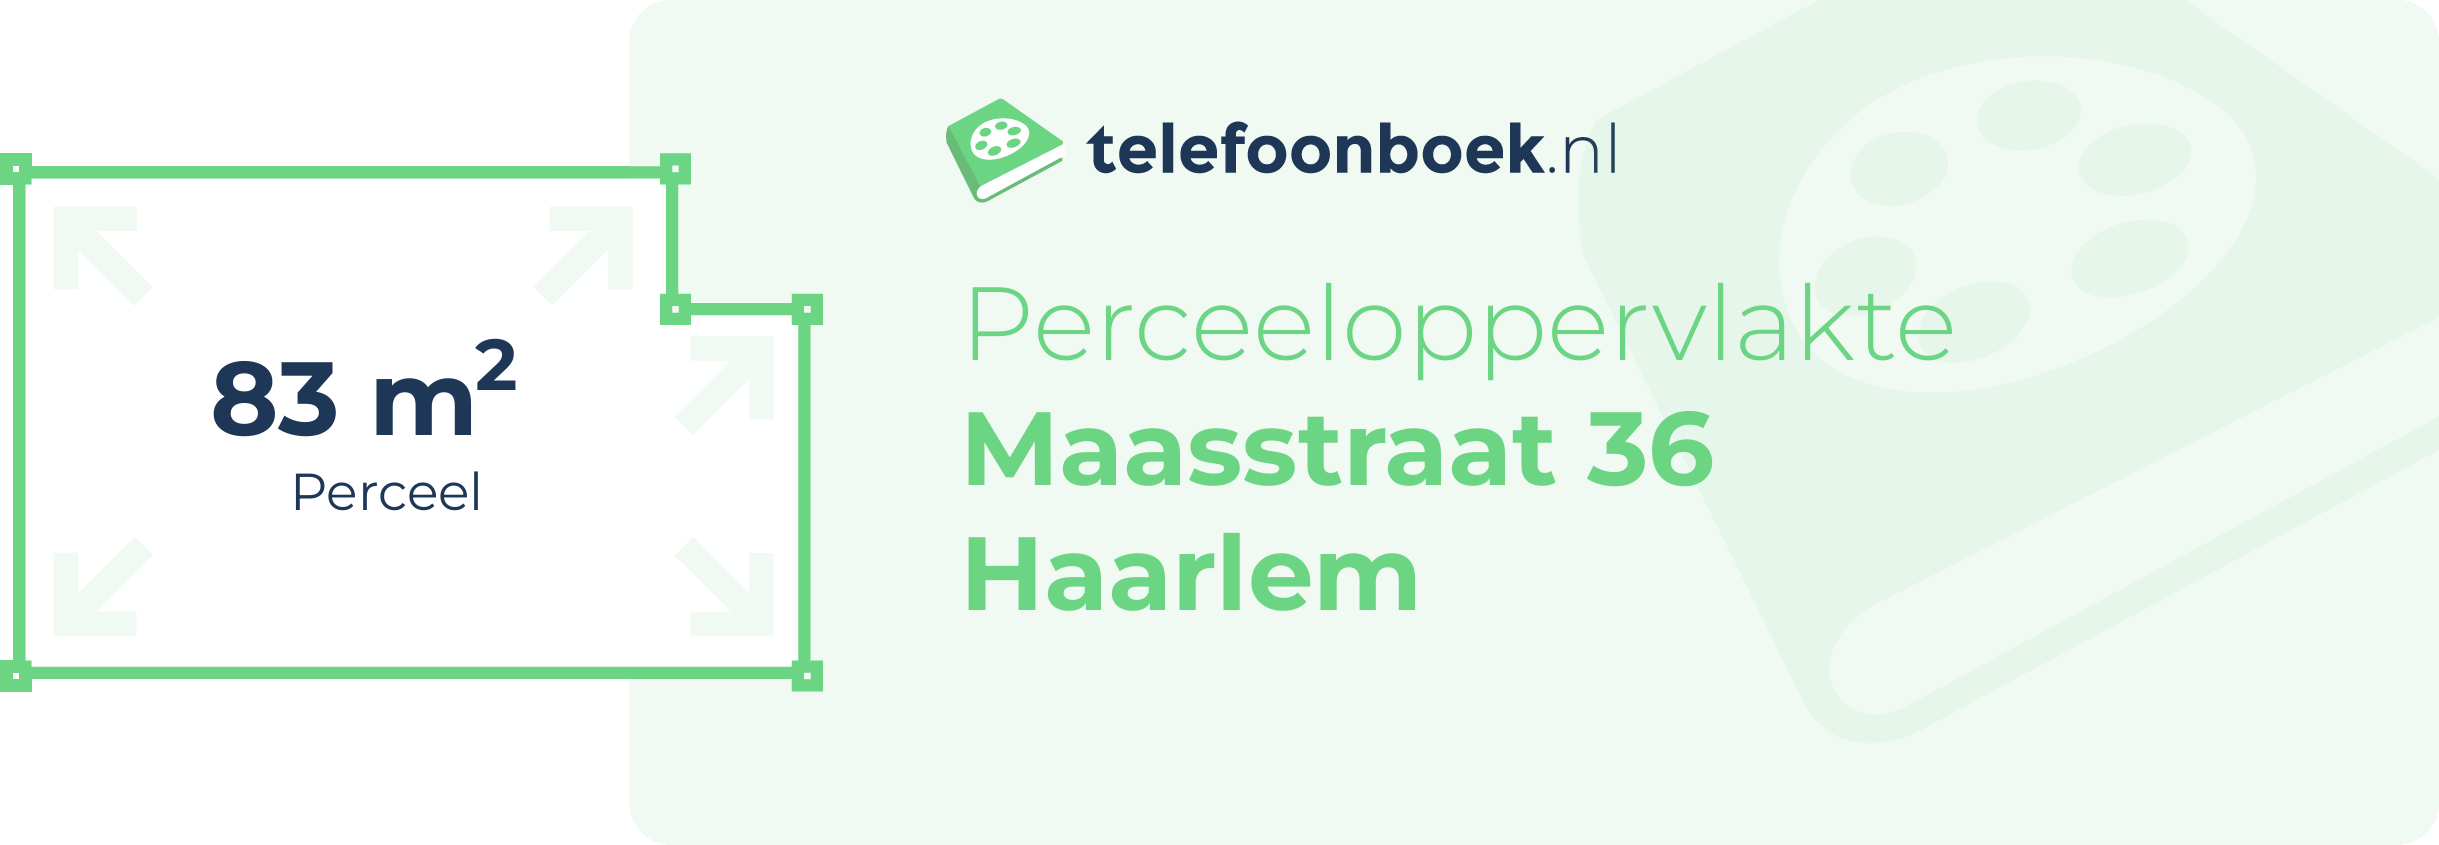 Perceeloppervlakte Maasstraat 36 Haarlem